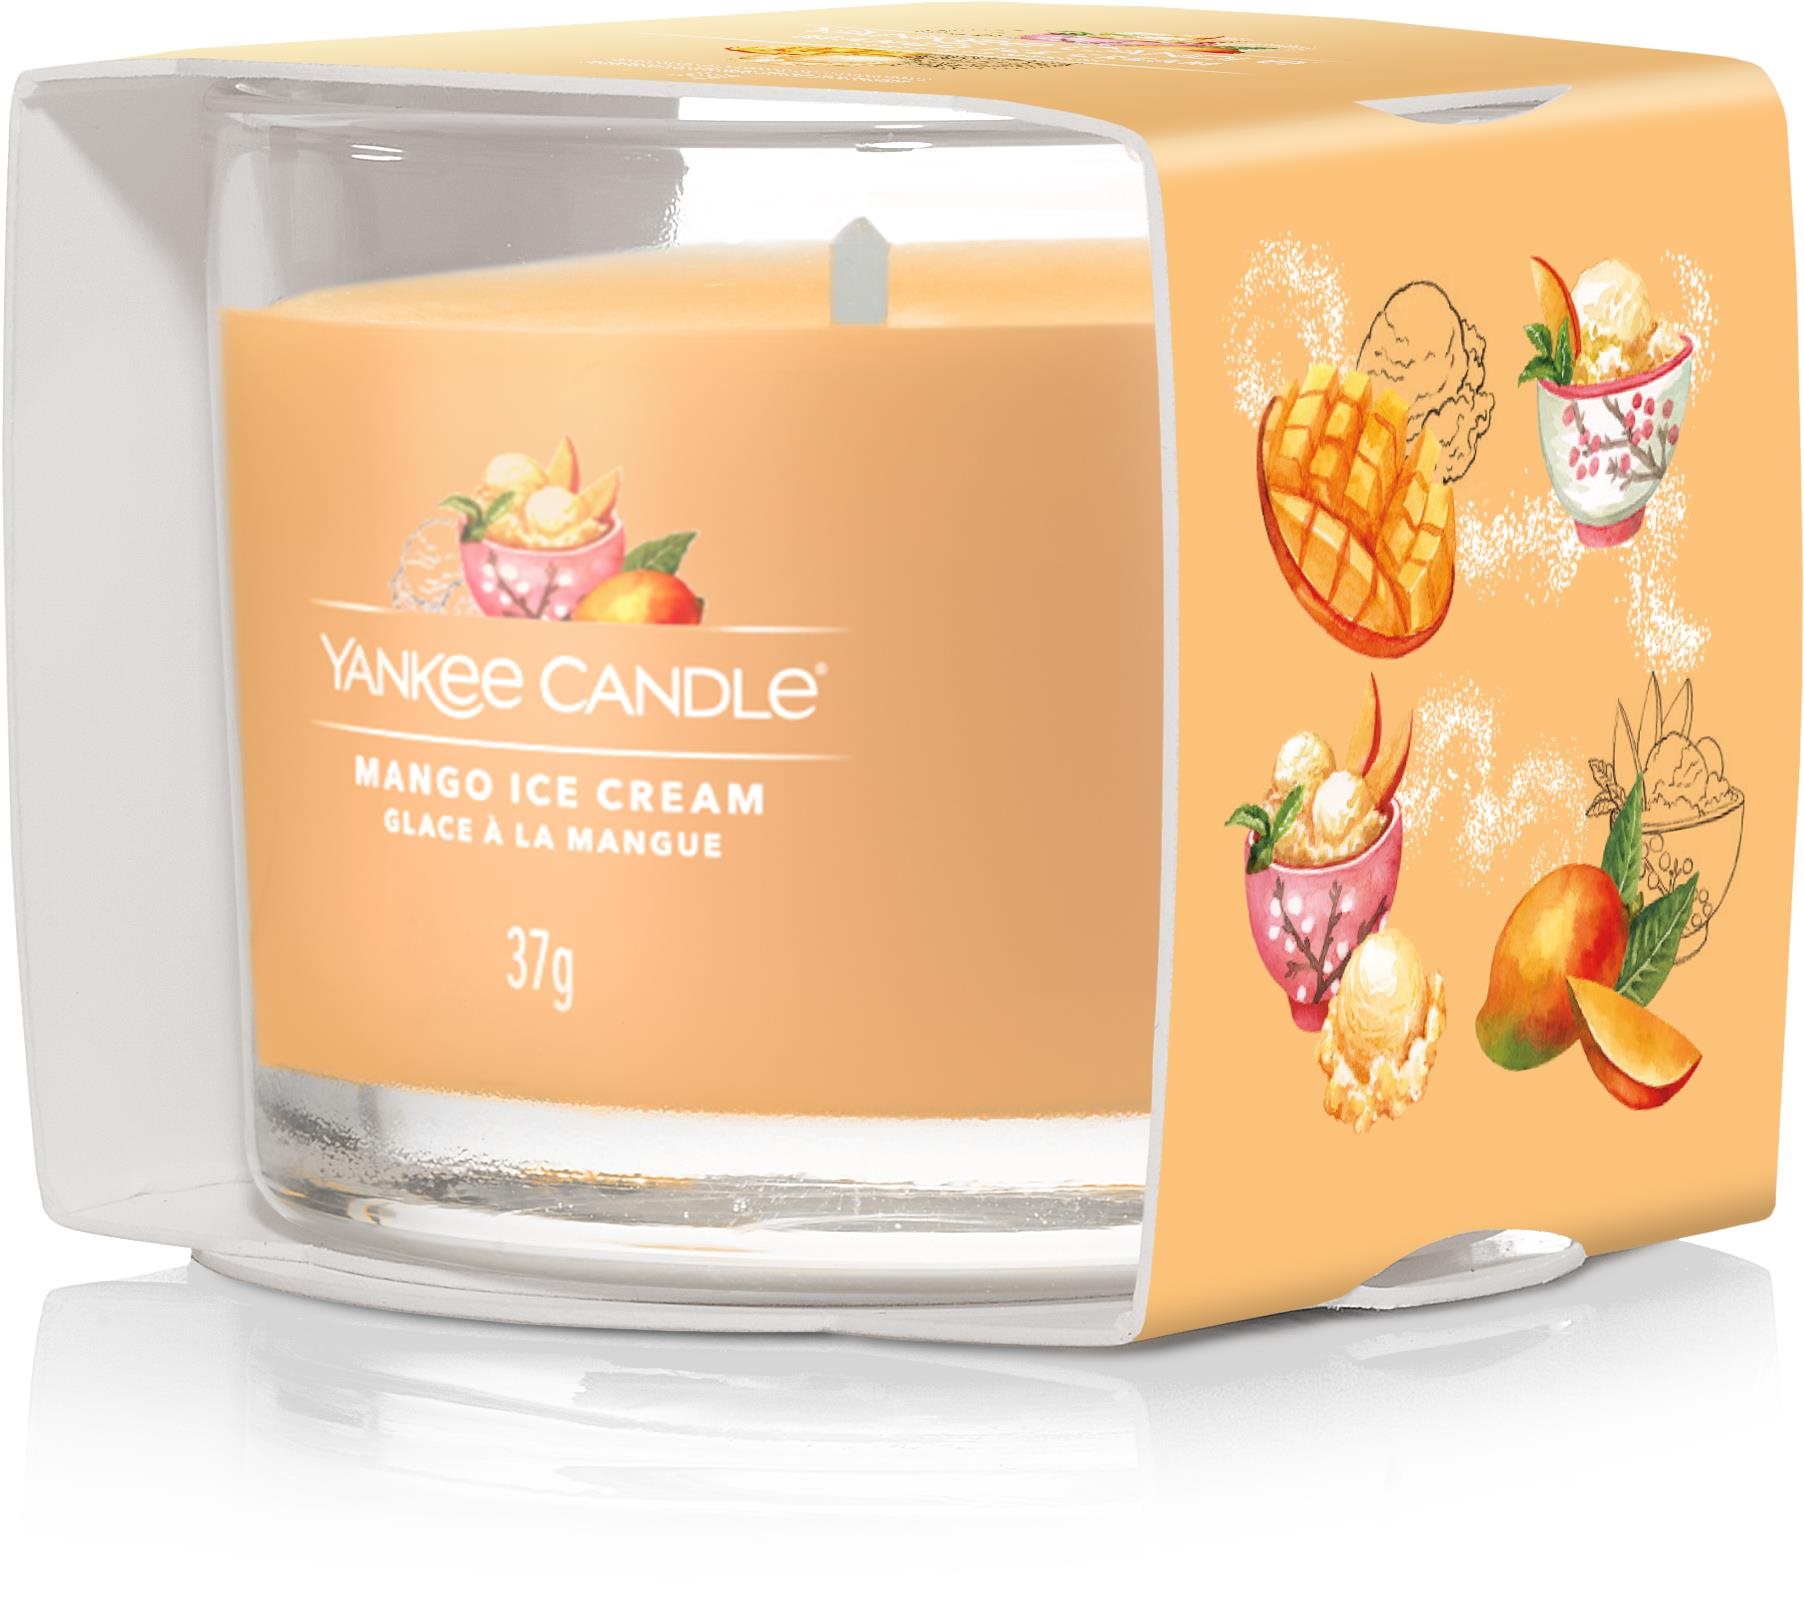 YANKEE CANDLE Mango Ice Cream Sampler 37 g